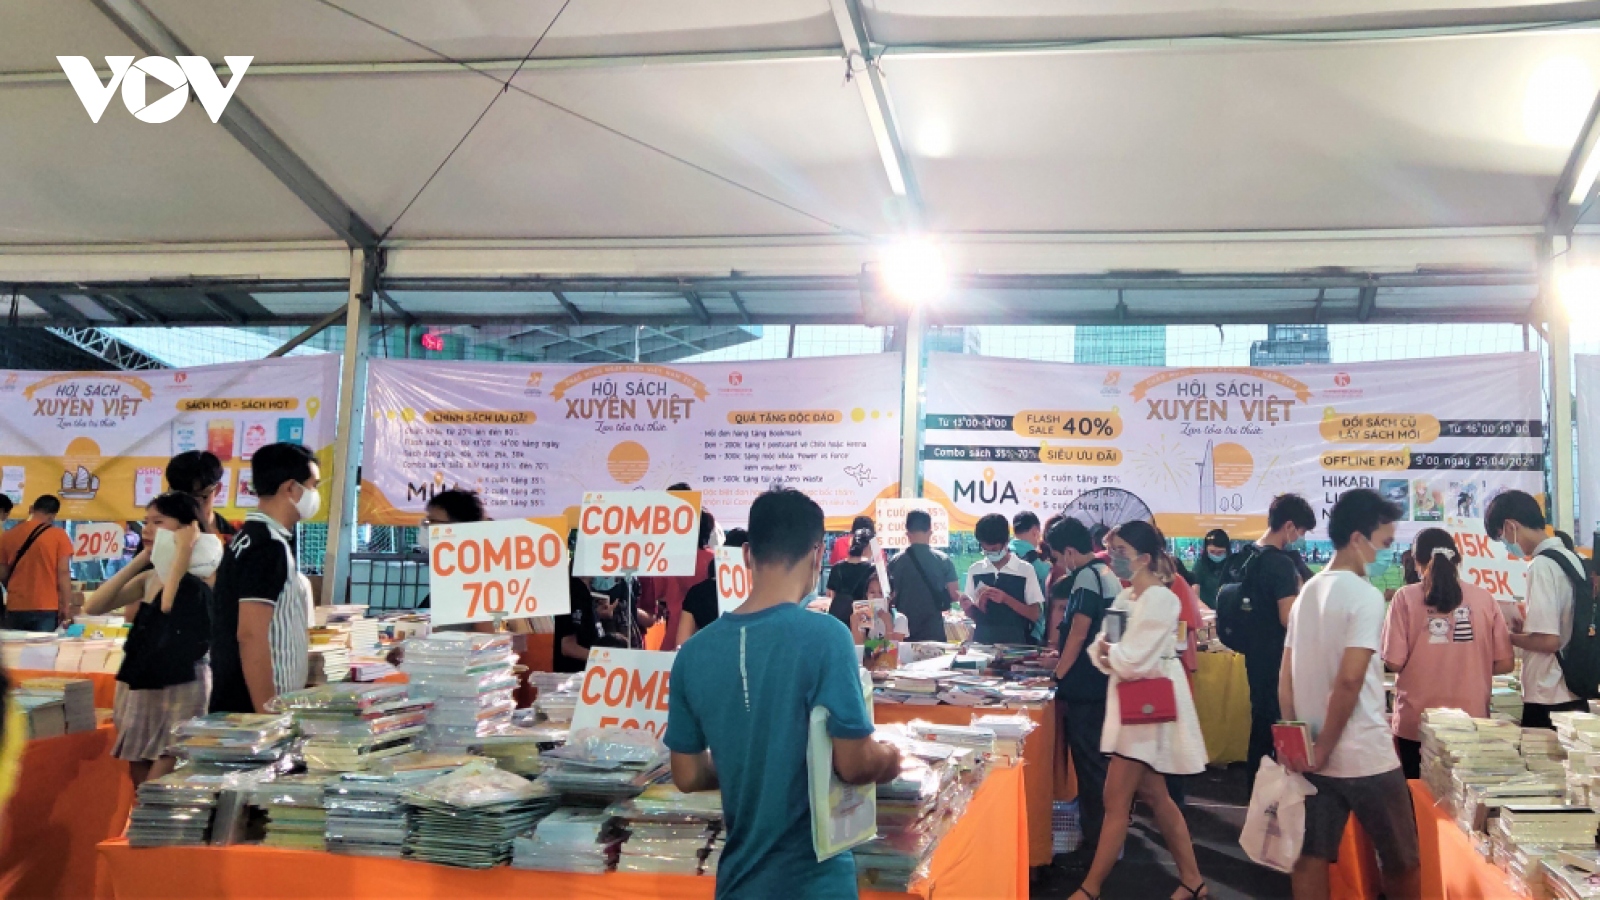 HCM City hosts debut trans-Vietnam book festival